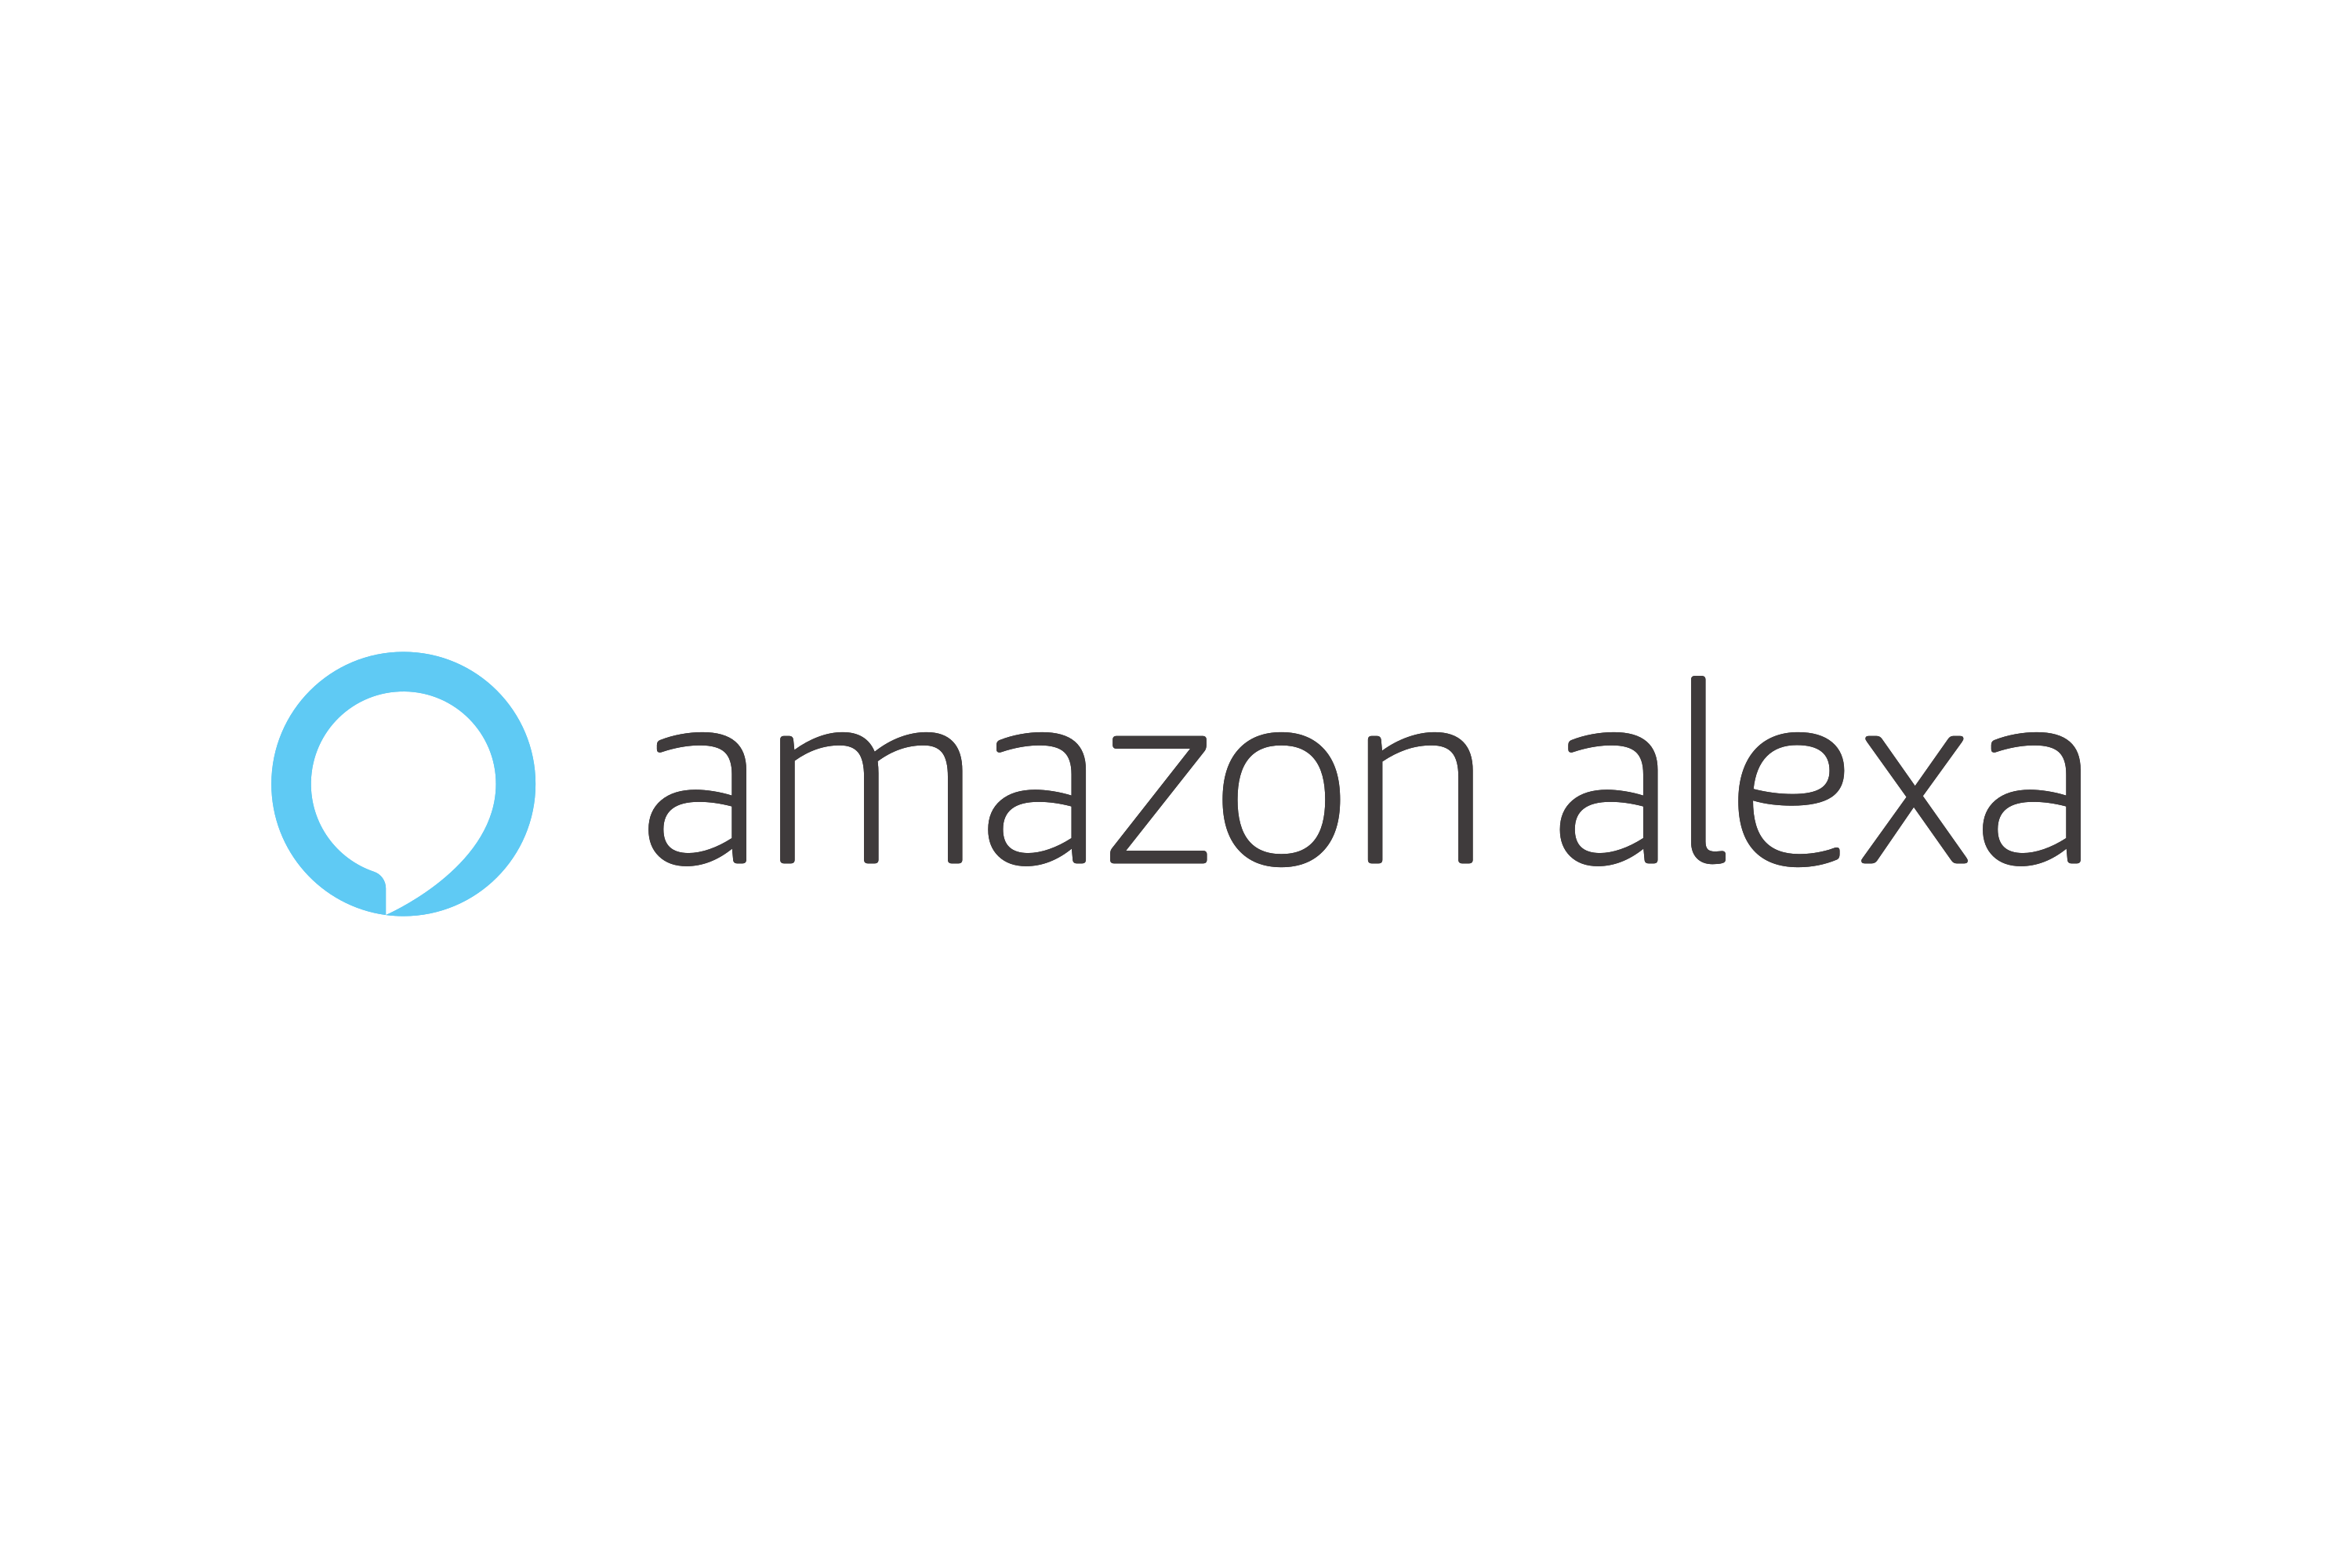 Download  Alexa Logo in SVG Vector or PNG File Format - Logo